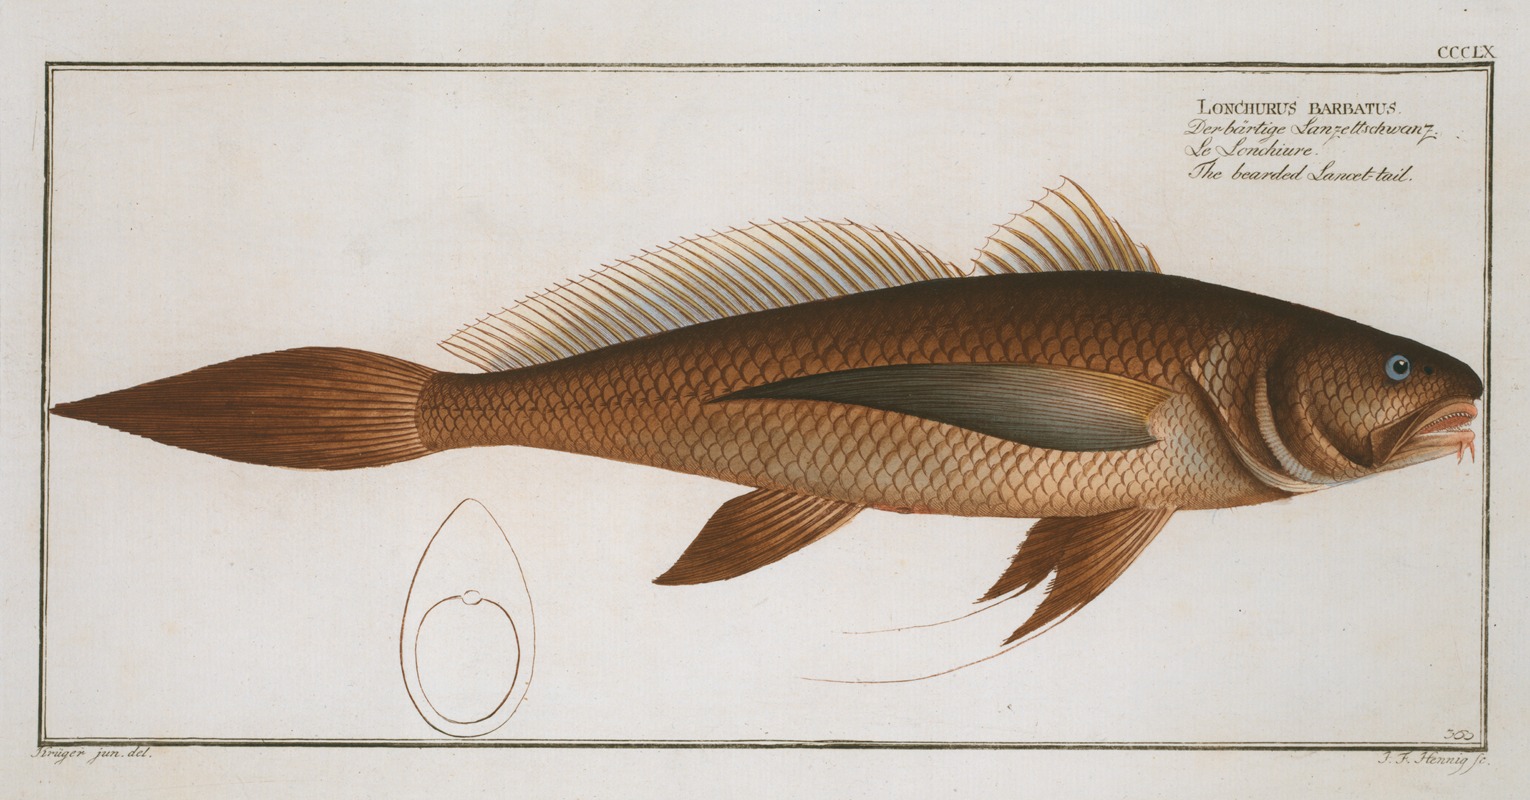 Marcus Elieser Bloch - Lonchurus barbatus, The bearded Lancet-tail.